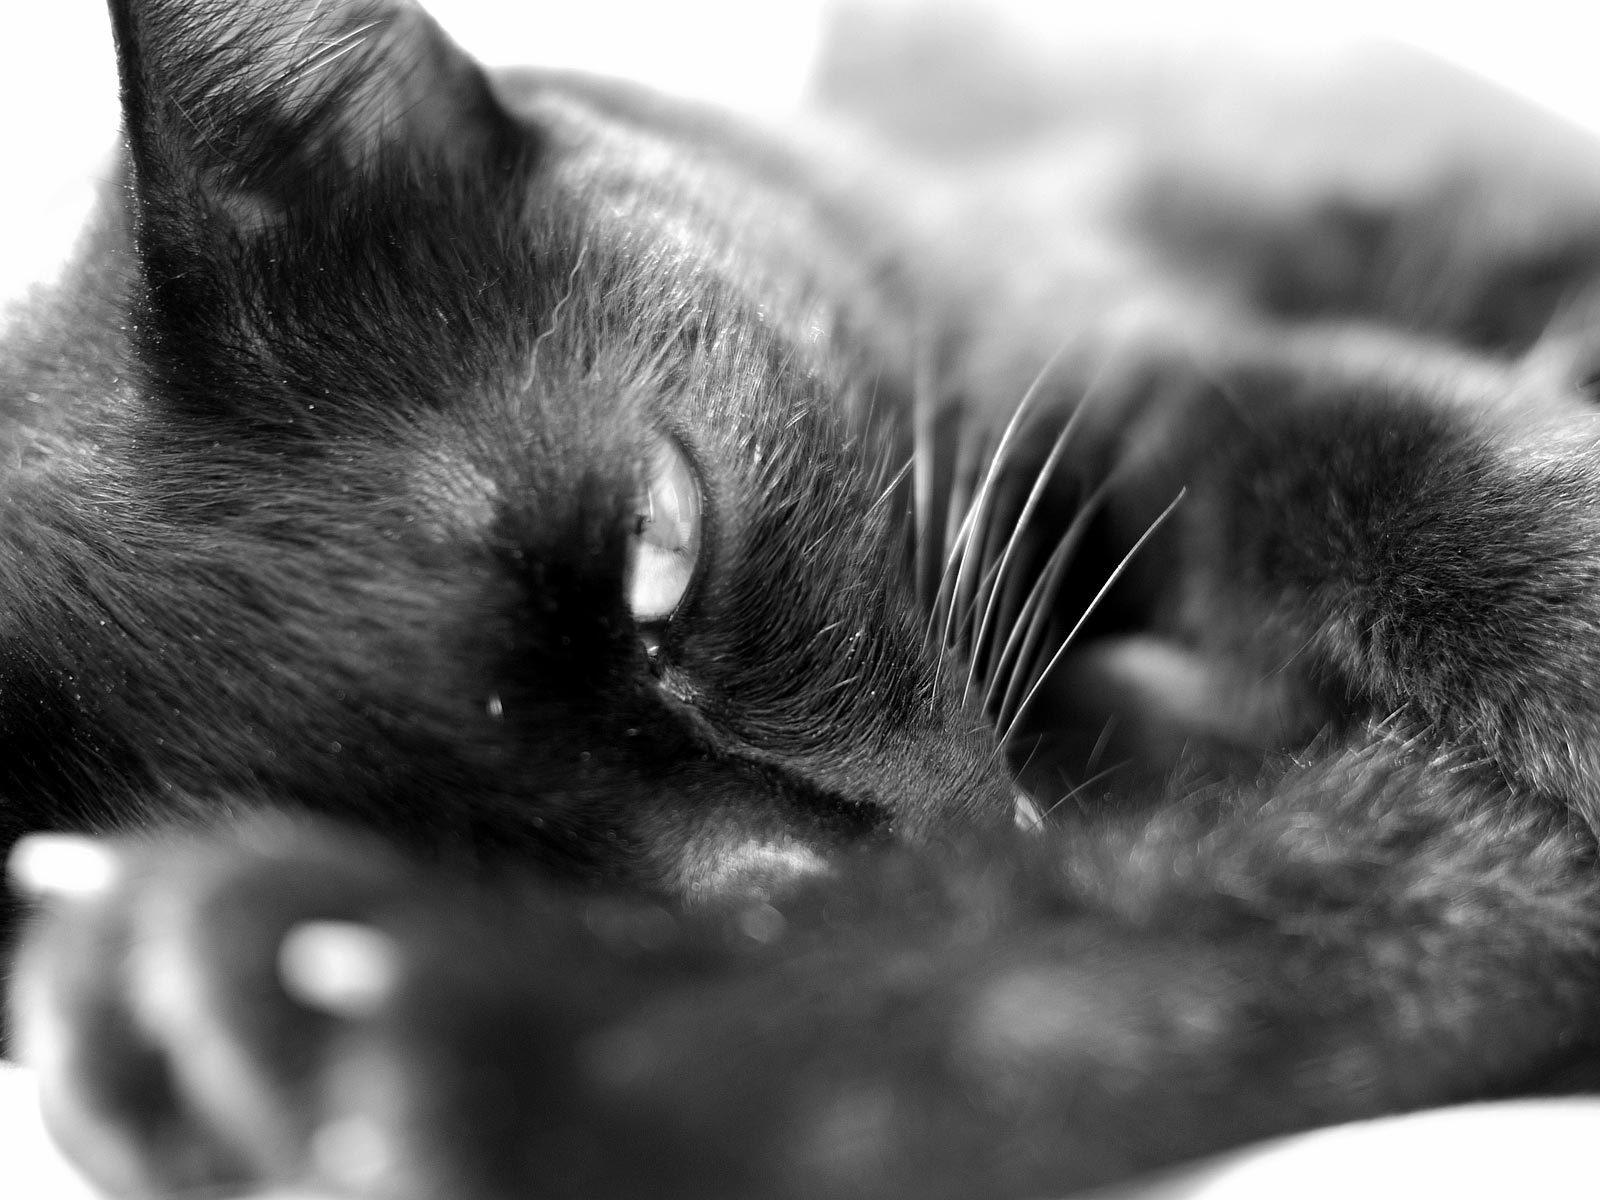 Sleepy black cat